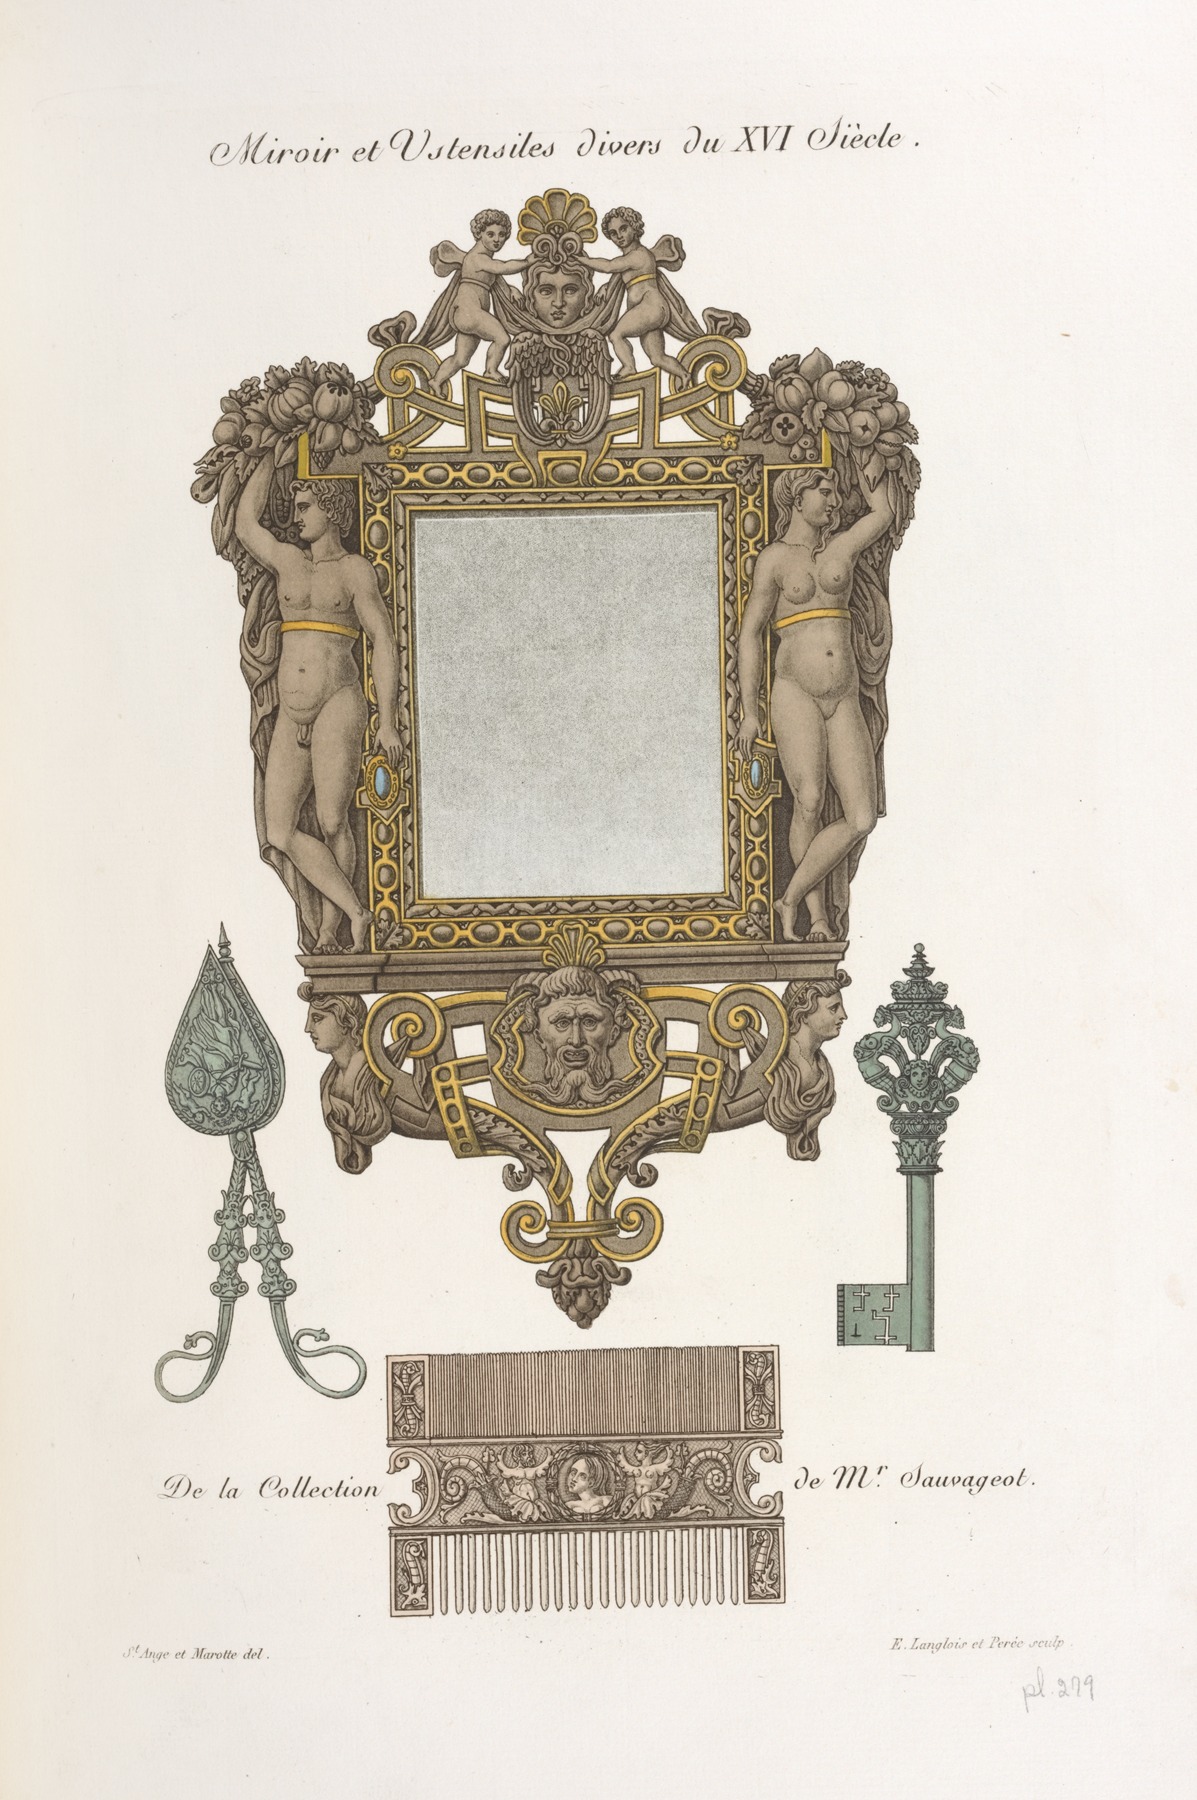 Nicolas Xavier Willemin - Miroir et ustensiles divers du XVI siècle.